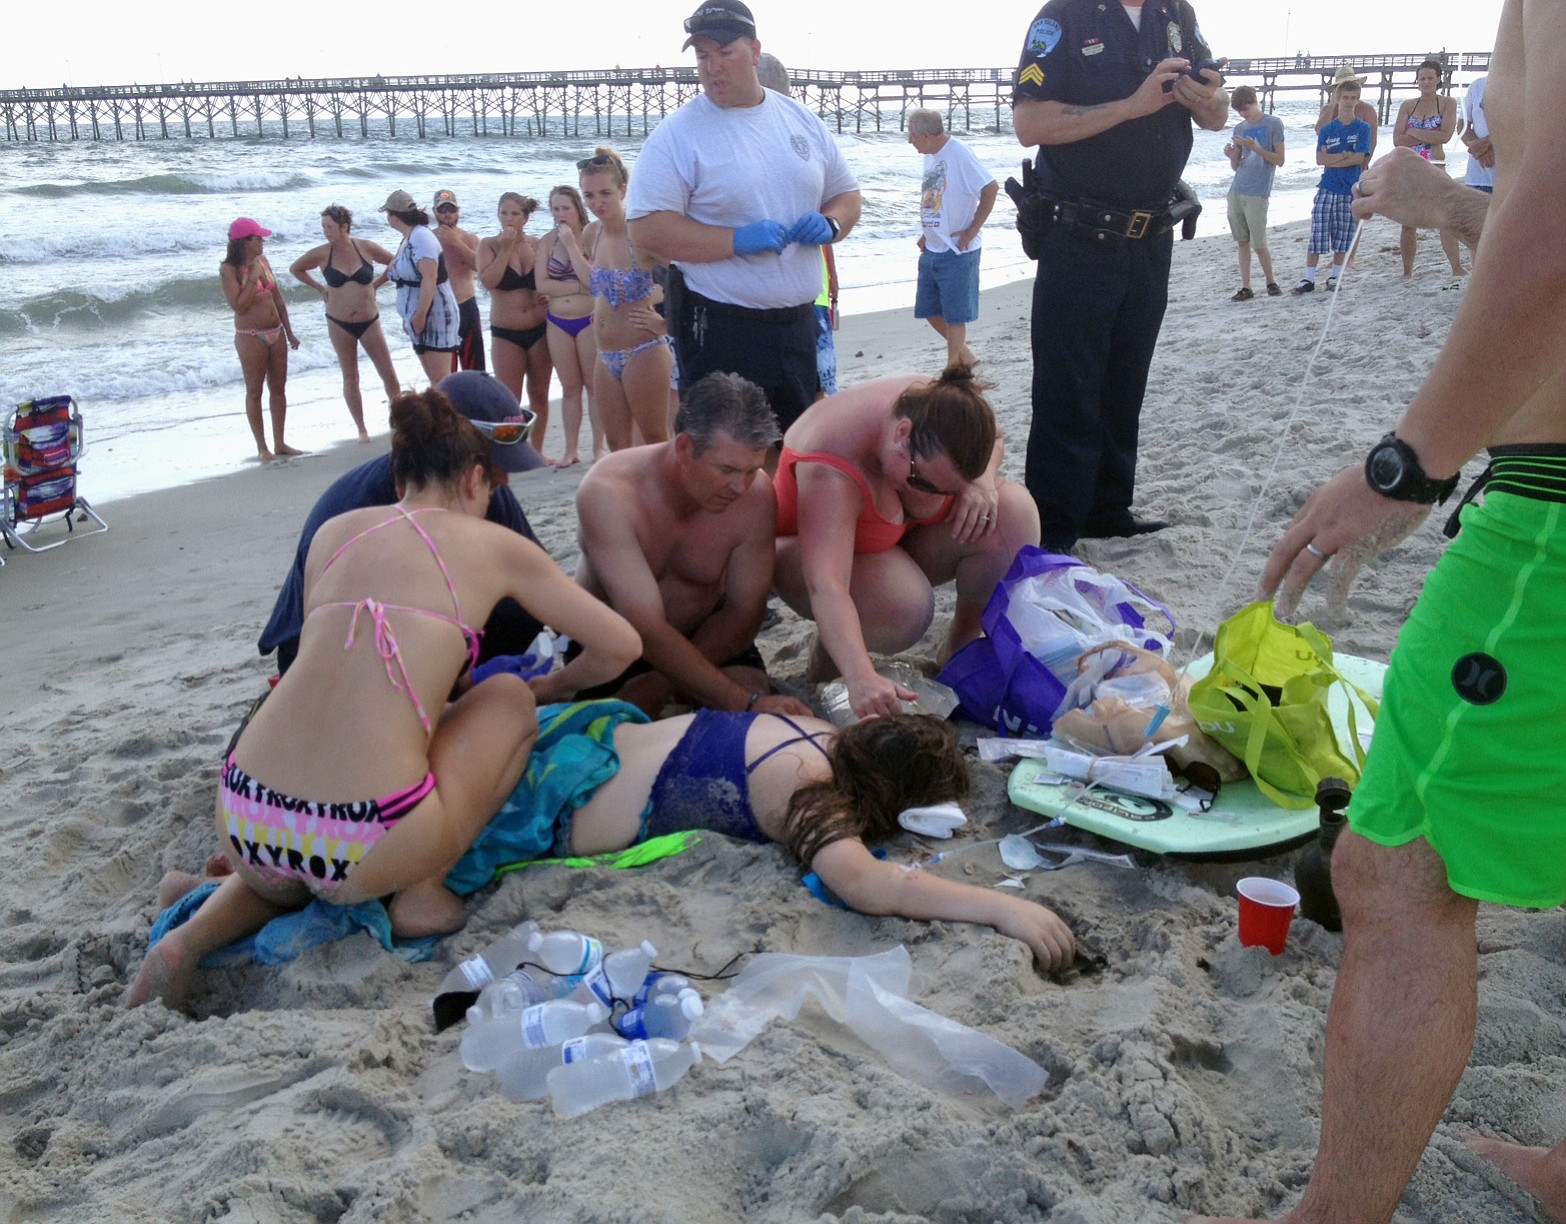 Emergency responders assist a teenage girl at the scene of a shark attack in Oak Island, N.C., Sunday.